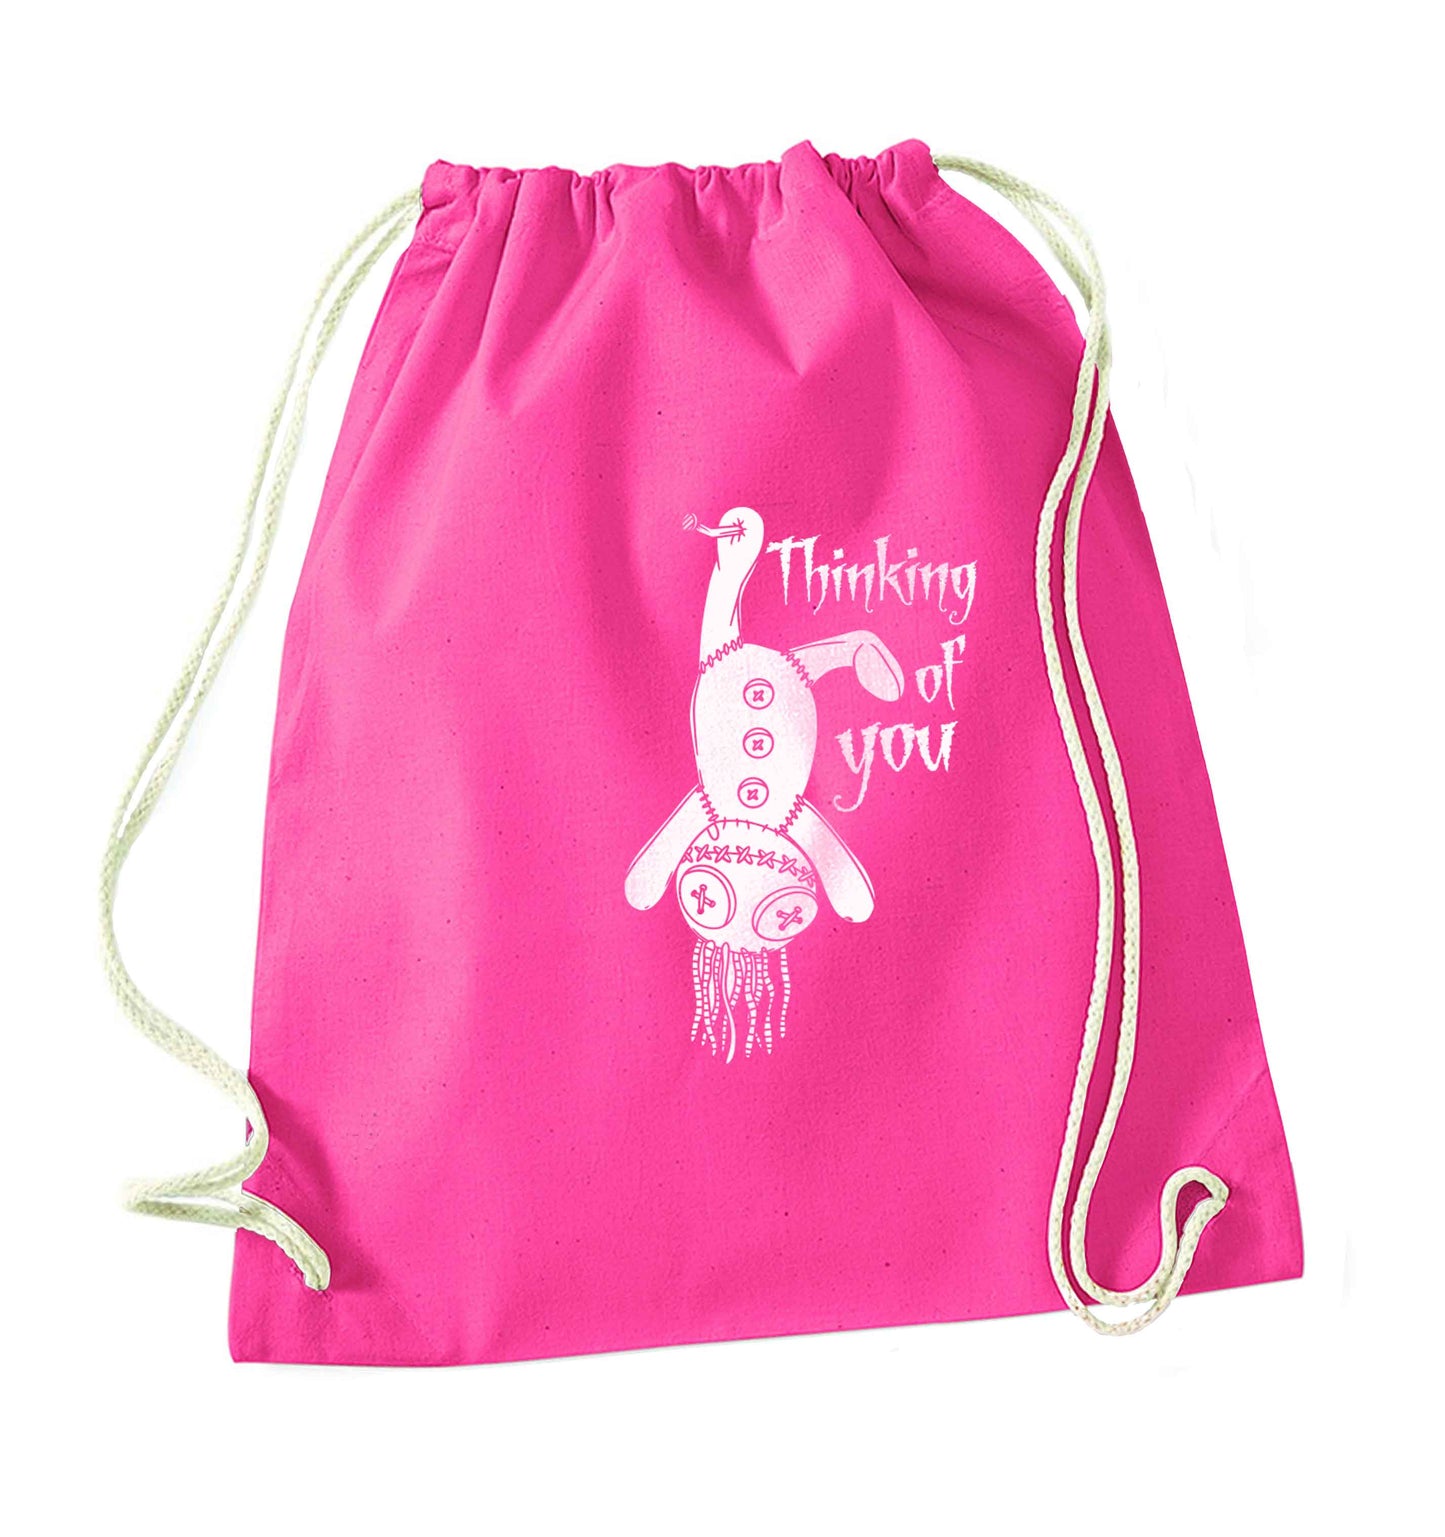 Thinking of you pink drawstring bag